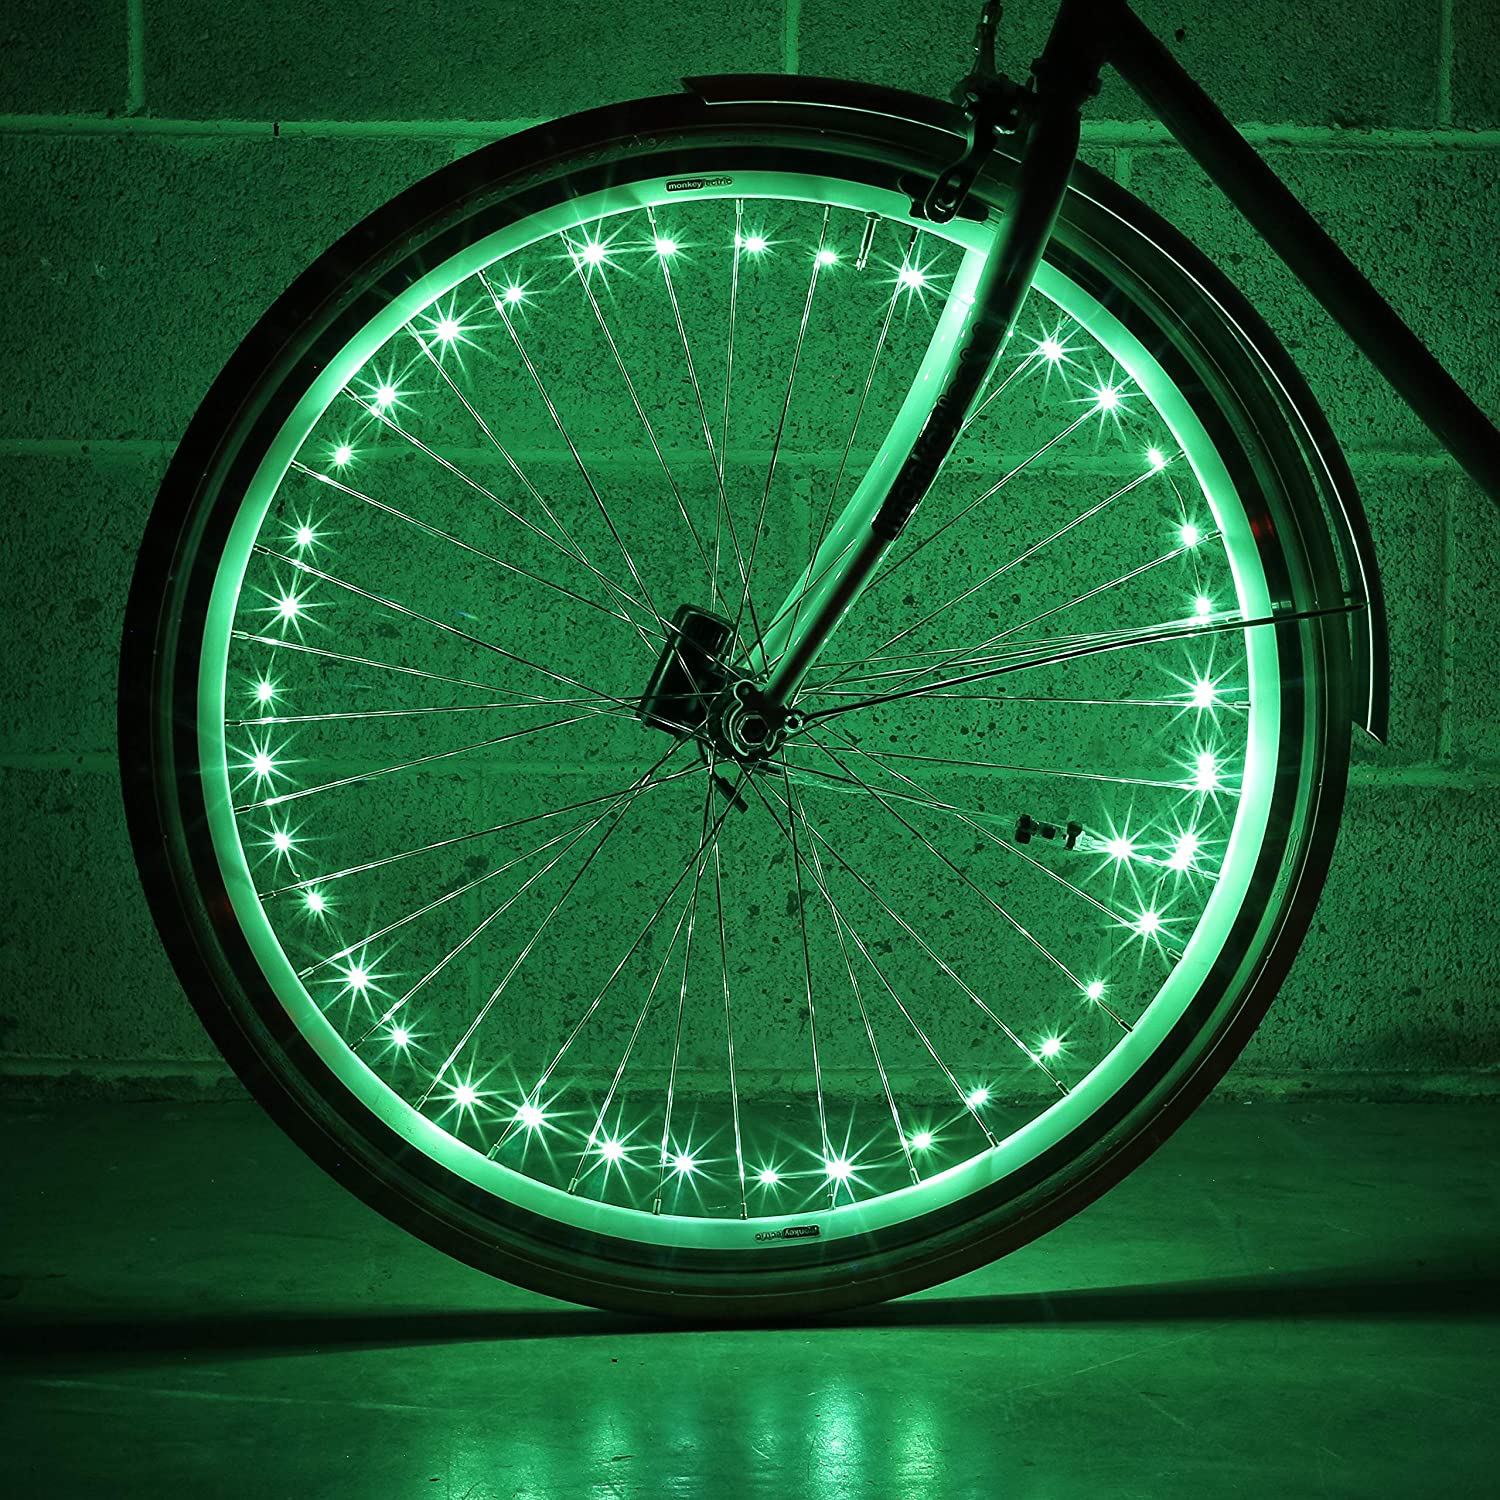 bike tire light